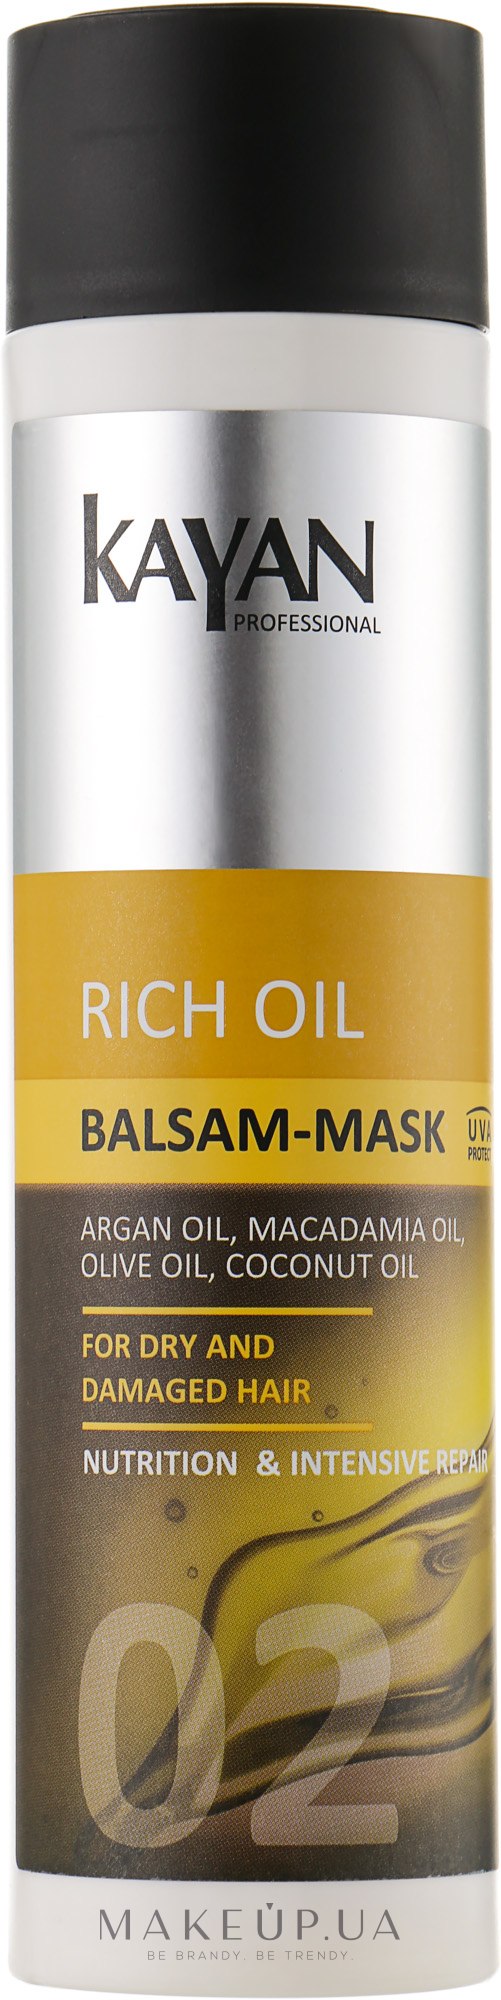 Бальзам-маска для сухого та пошкодженого волосся - Kayan Professional Rich Oil Balsam-Mask — фото 250ml